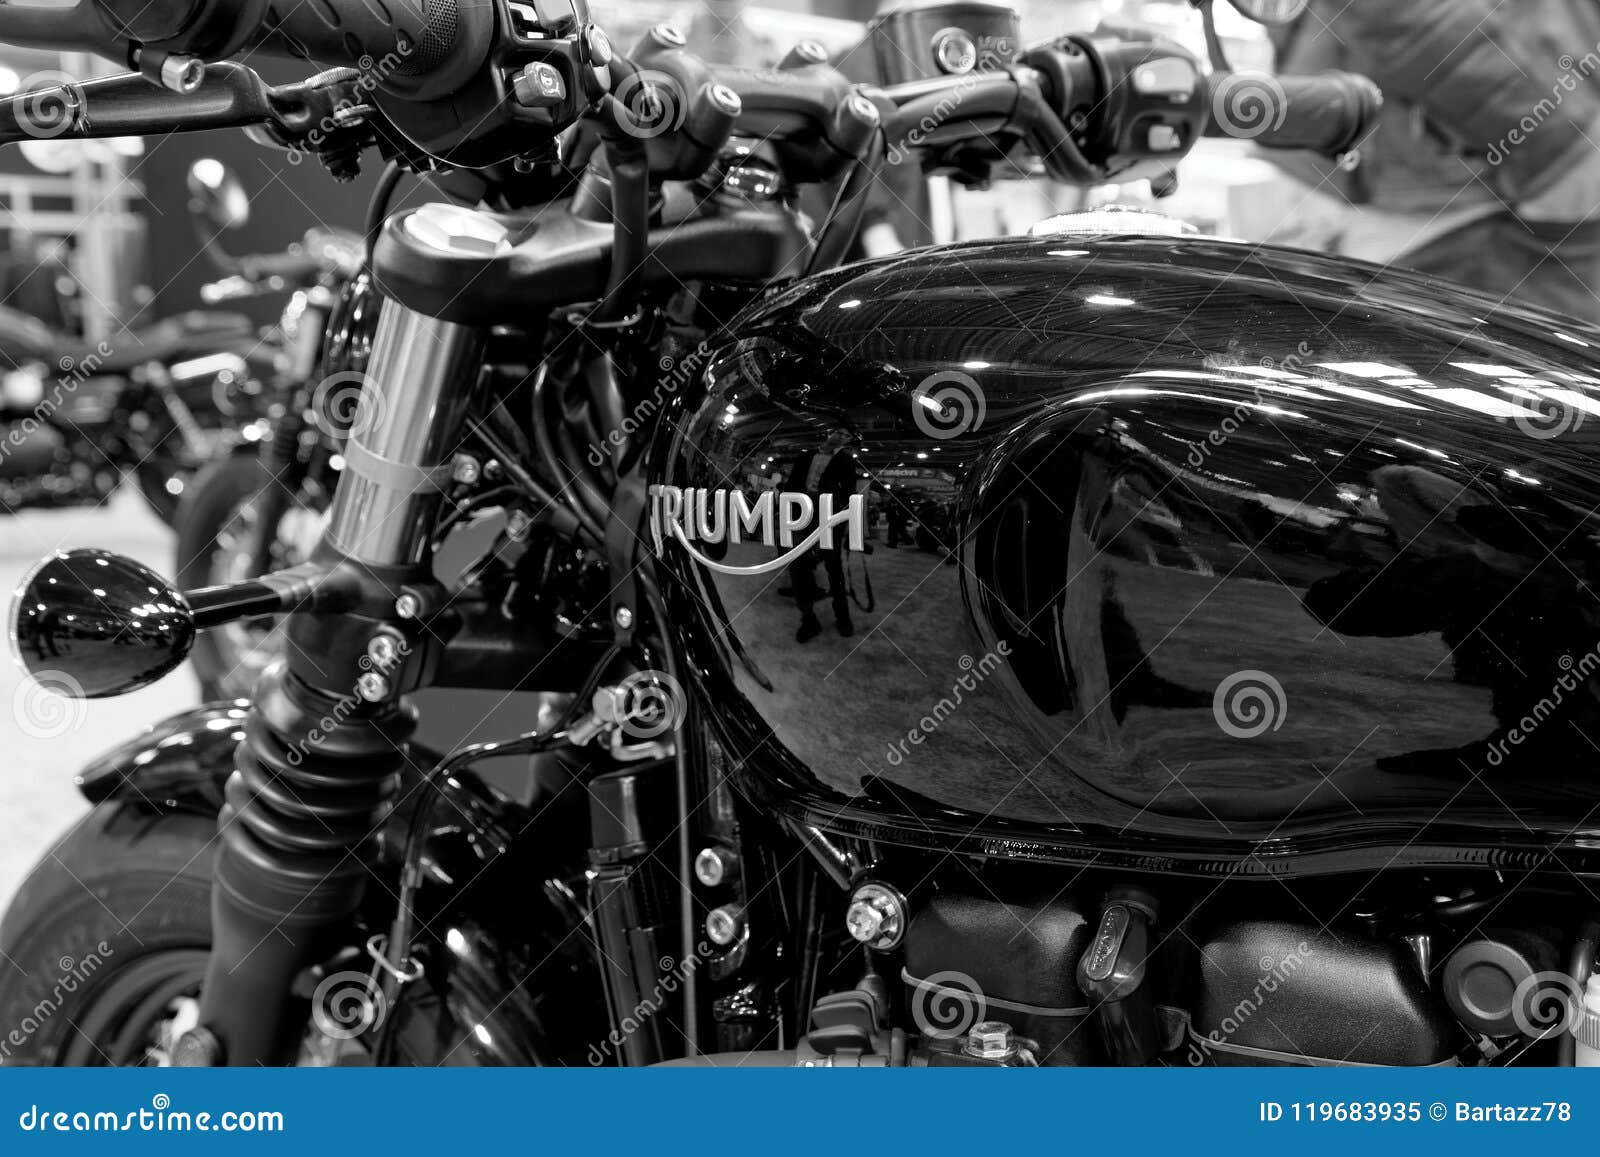 Moto, chopper, Triumph, desenho Foto stock gratuita - Public Domain Pictures